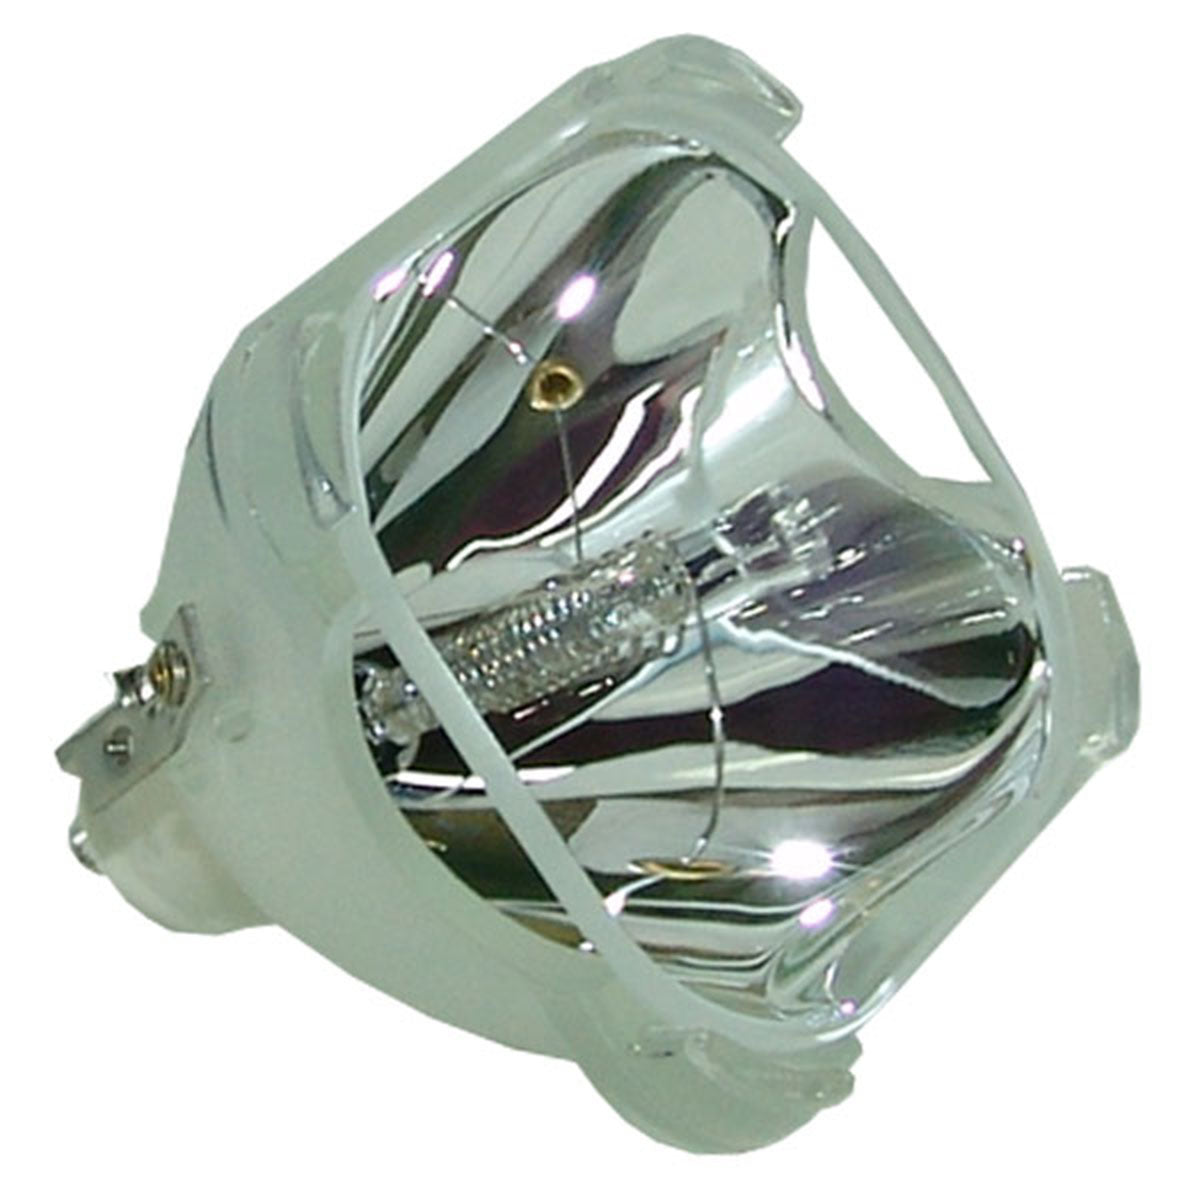 Yamaha PJL-5015 Osram Projector Bare Lamp